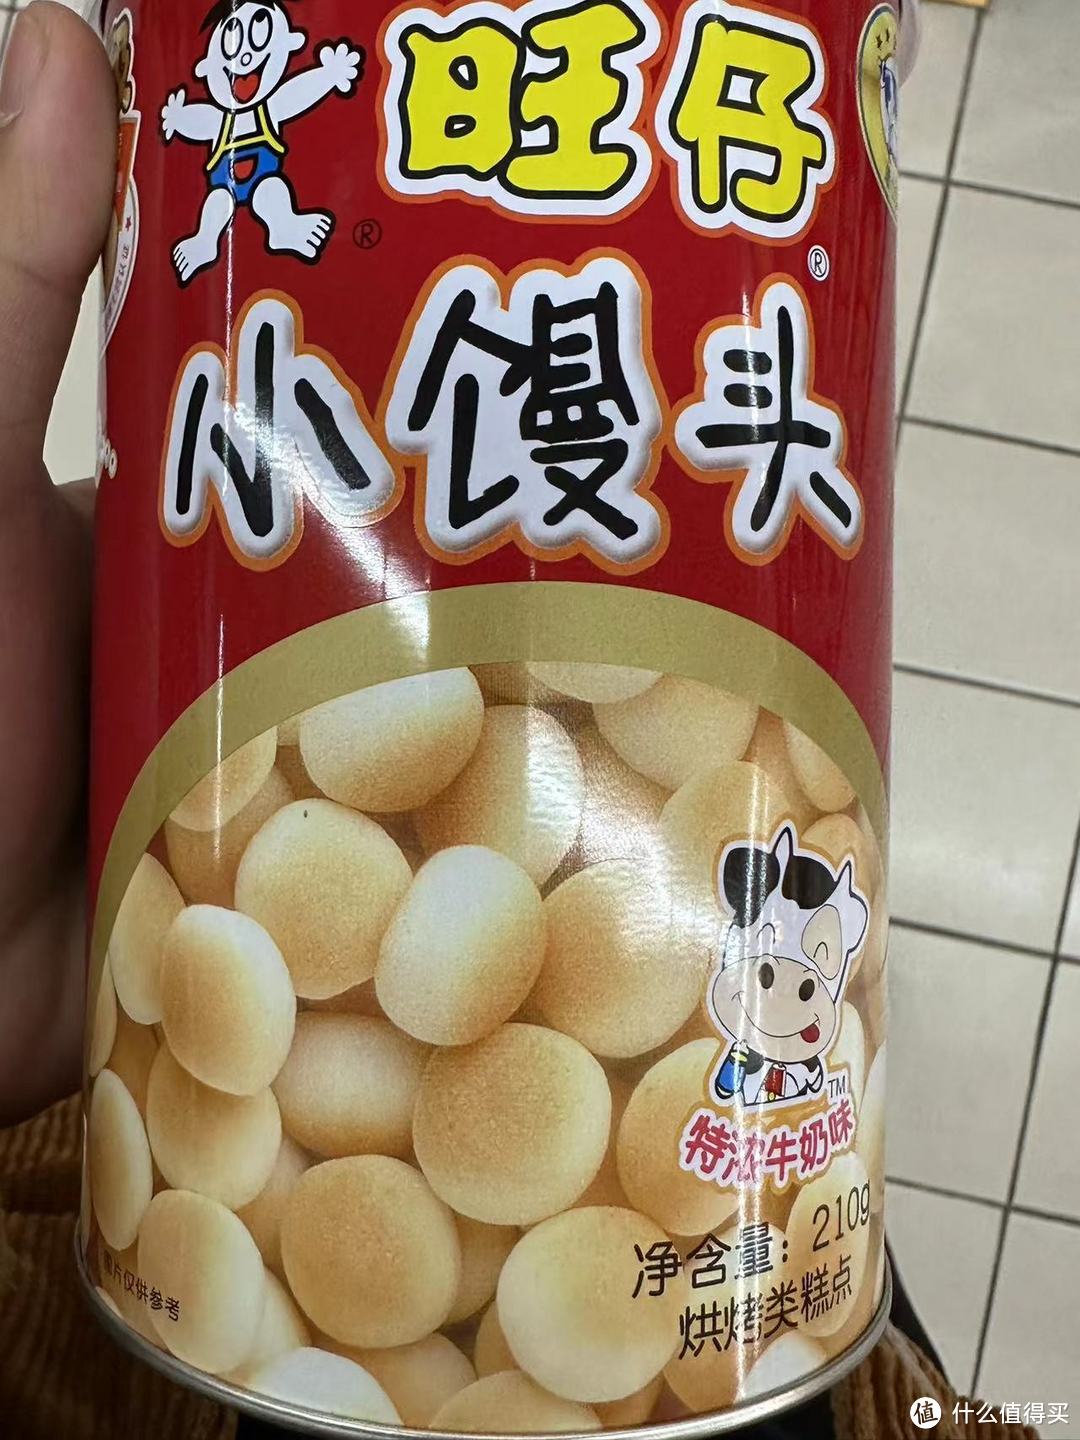 旺仔 小馒头蜂蜜味 - 7.4 oz (210 g) - Well Come Asian Market